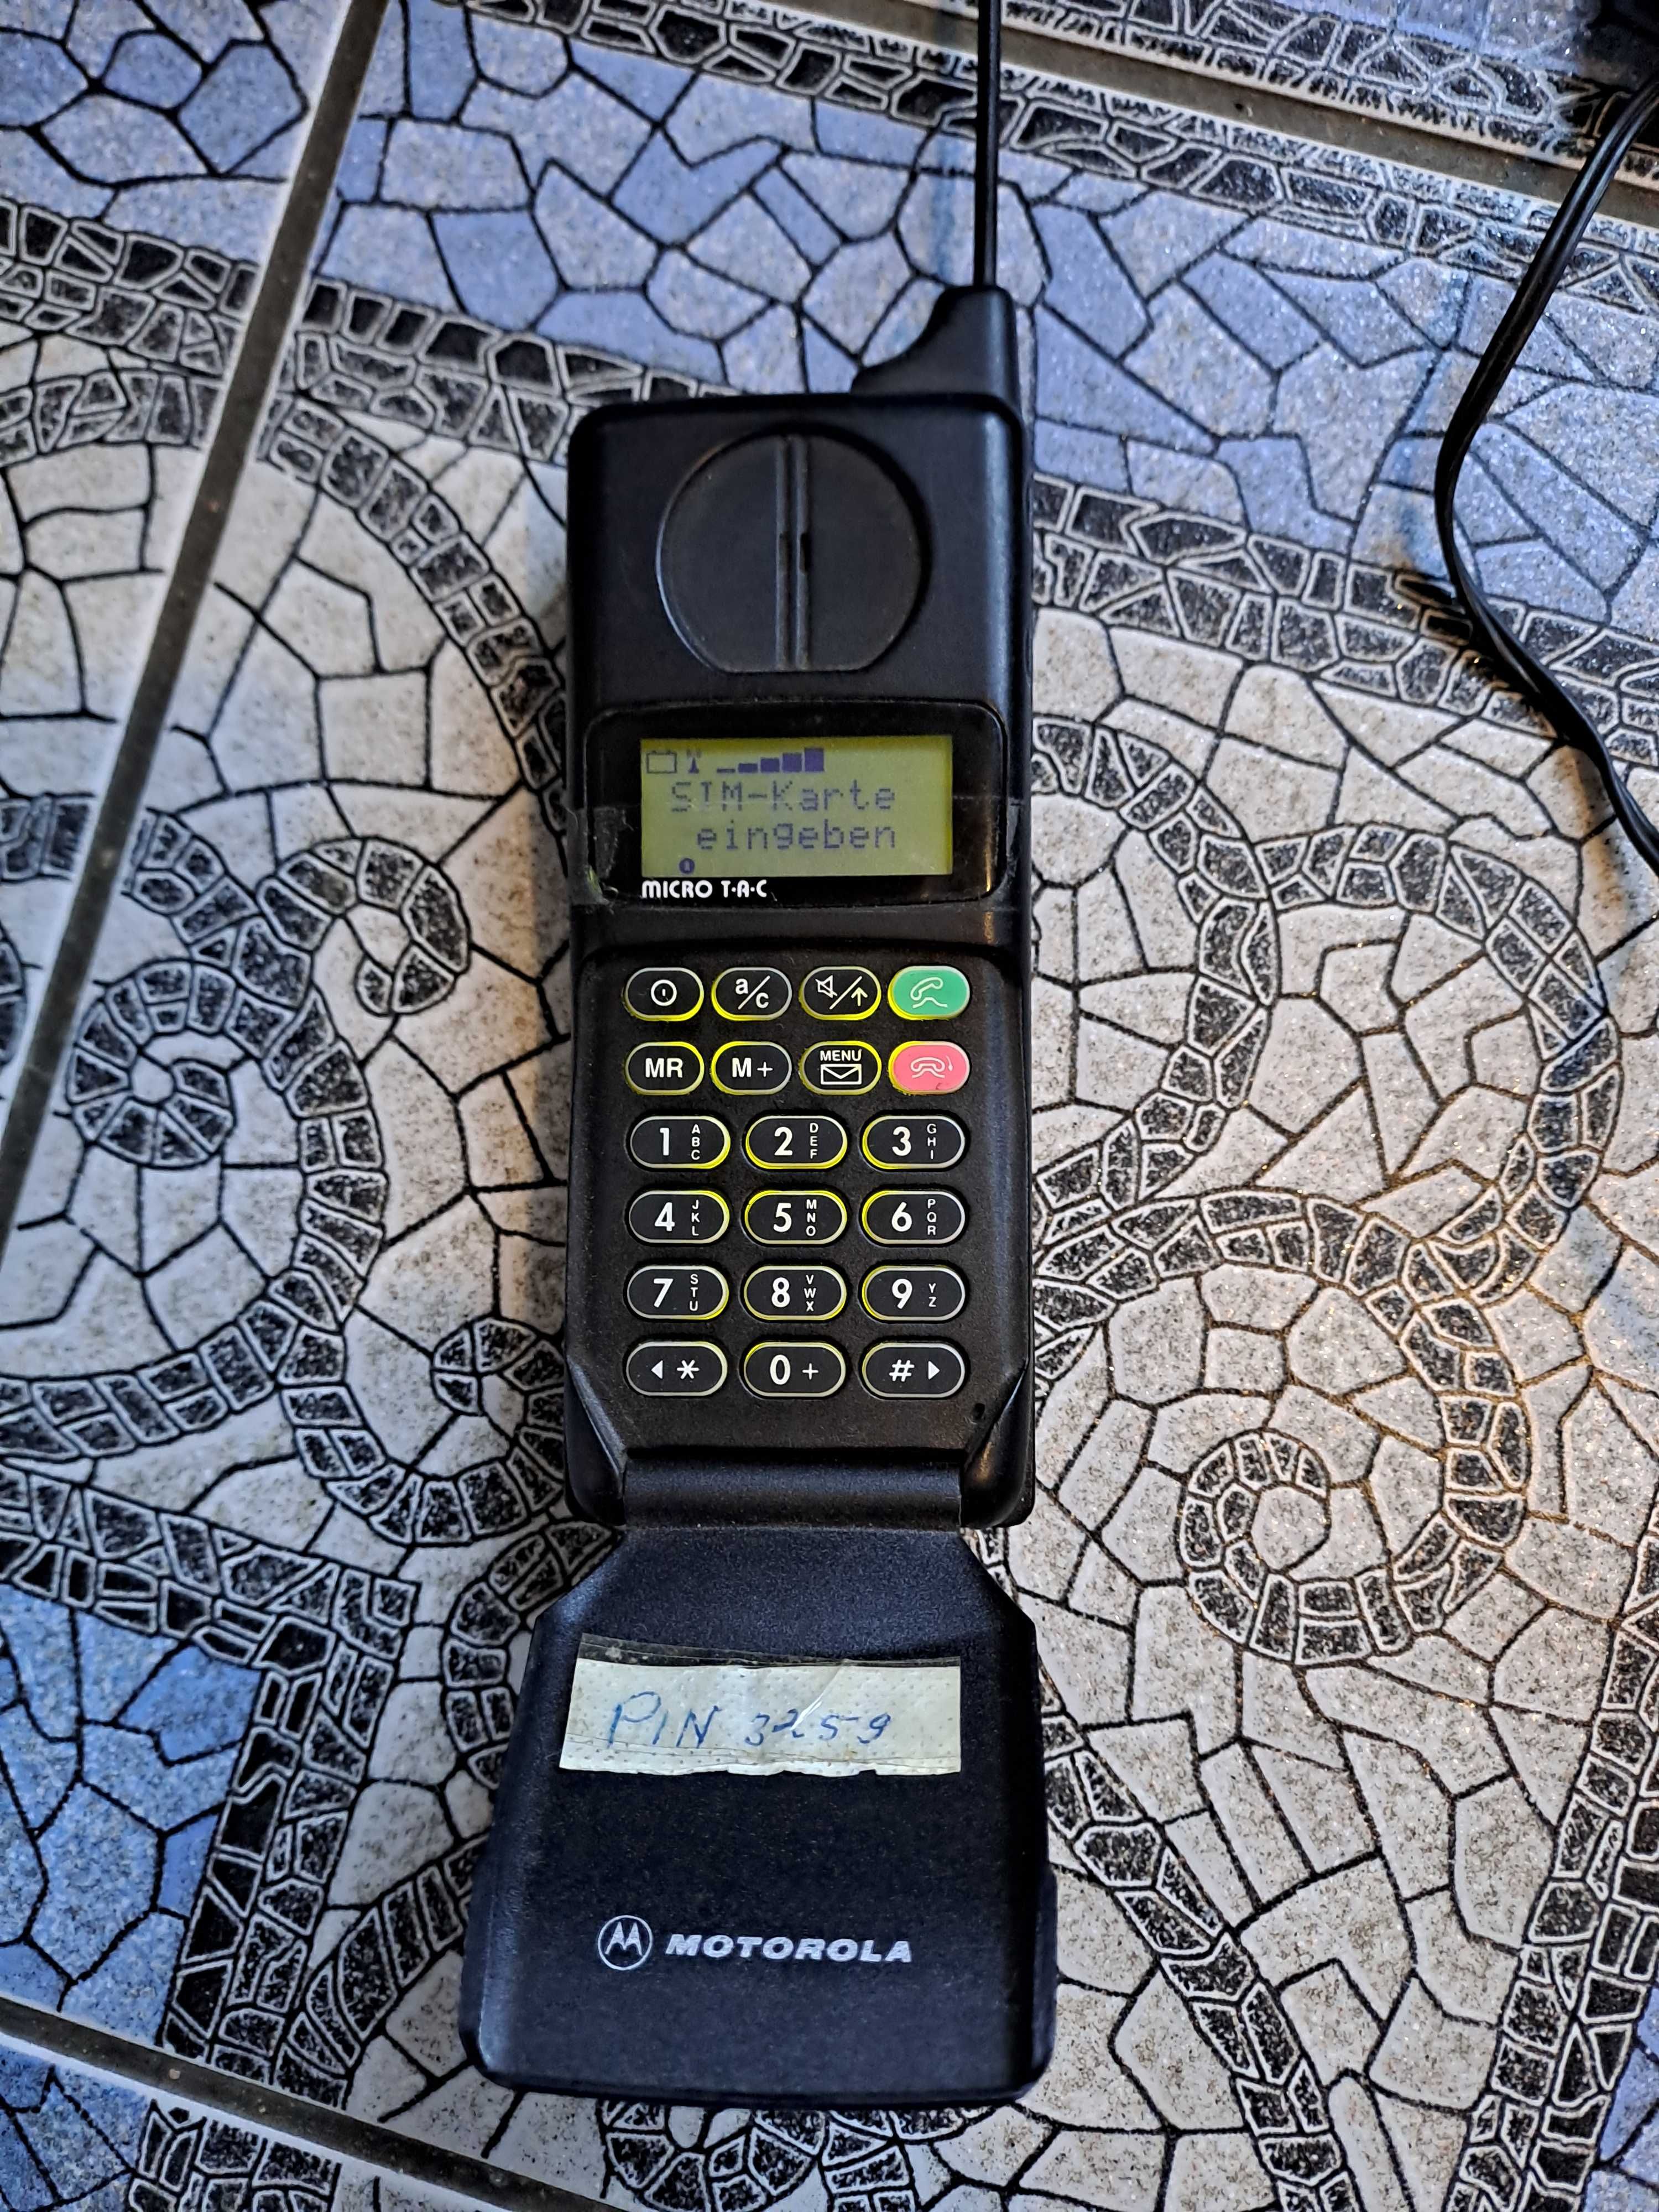 Motorola international 7200, раритетні телефони  у хорошому стані.